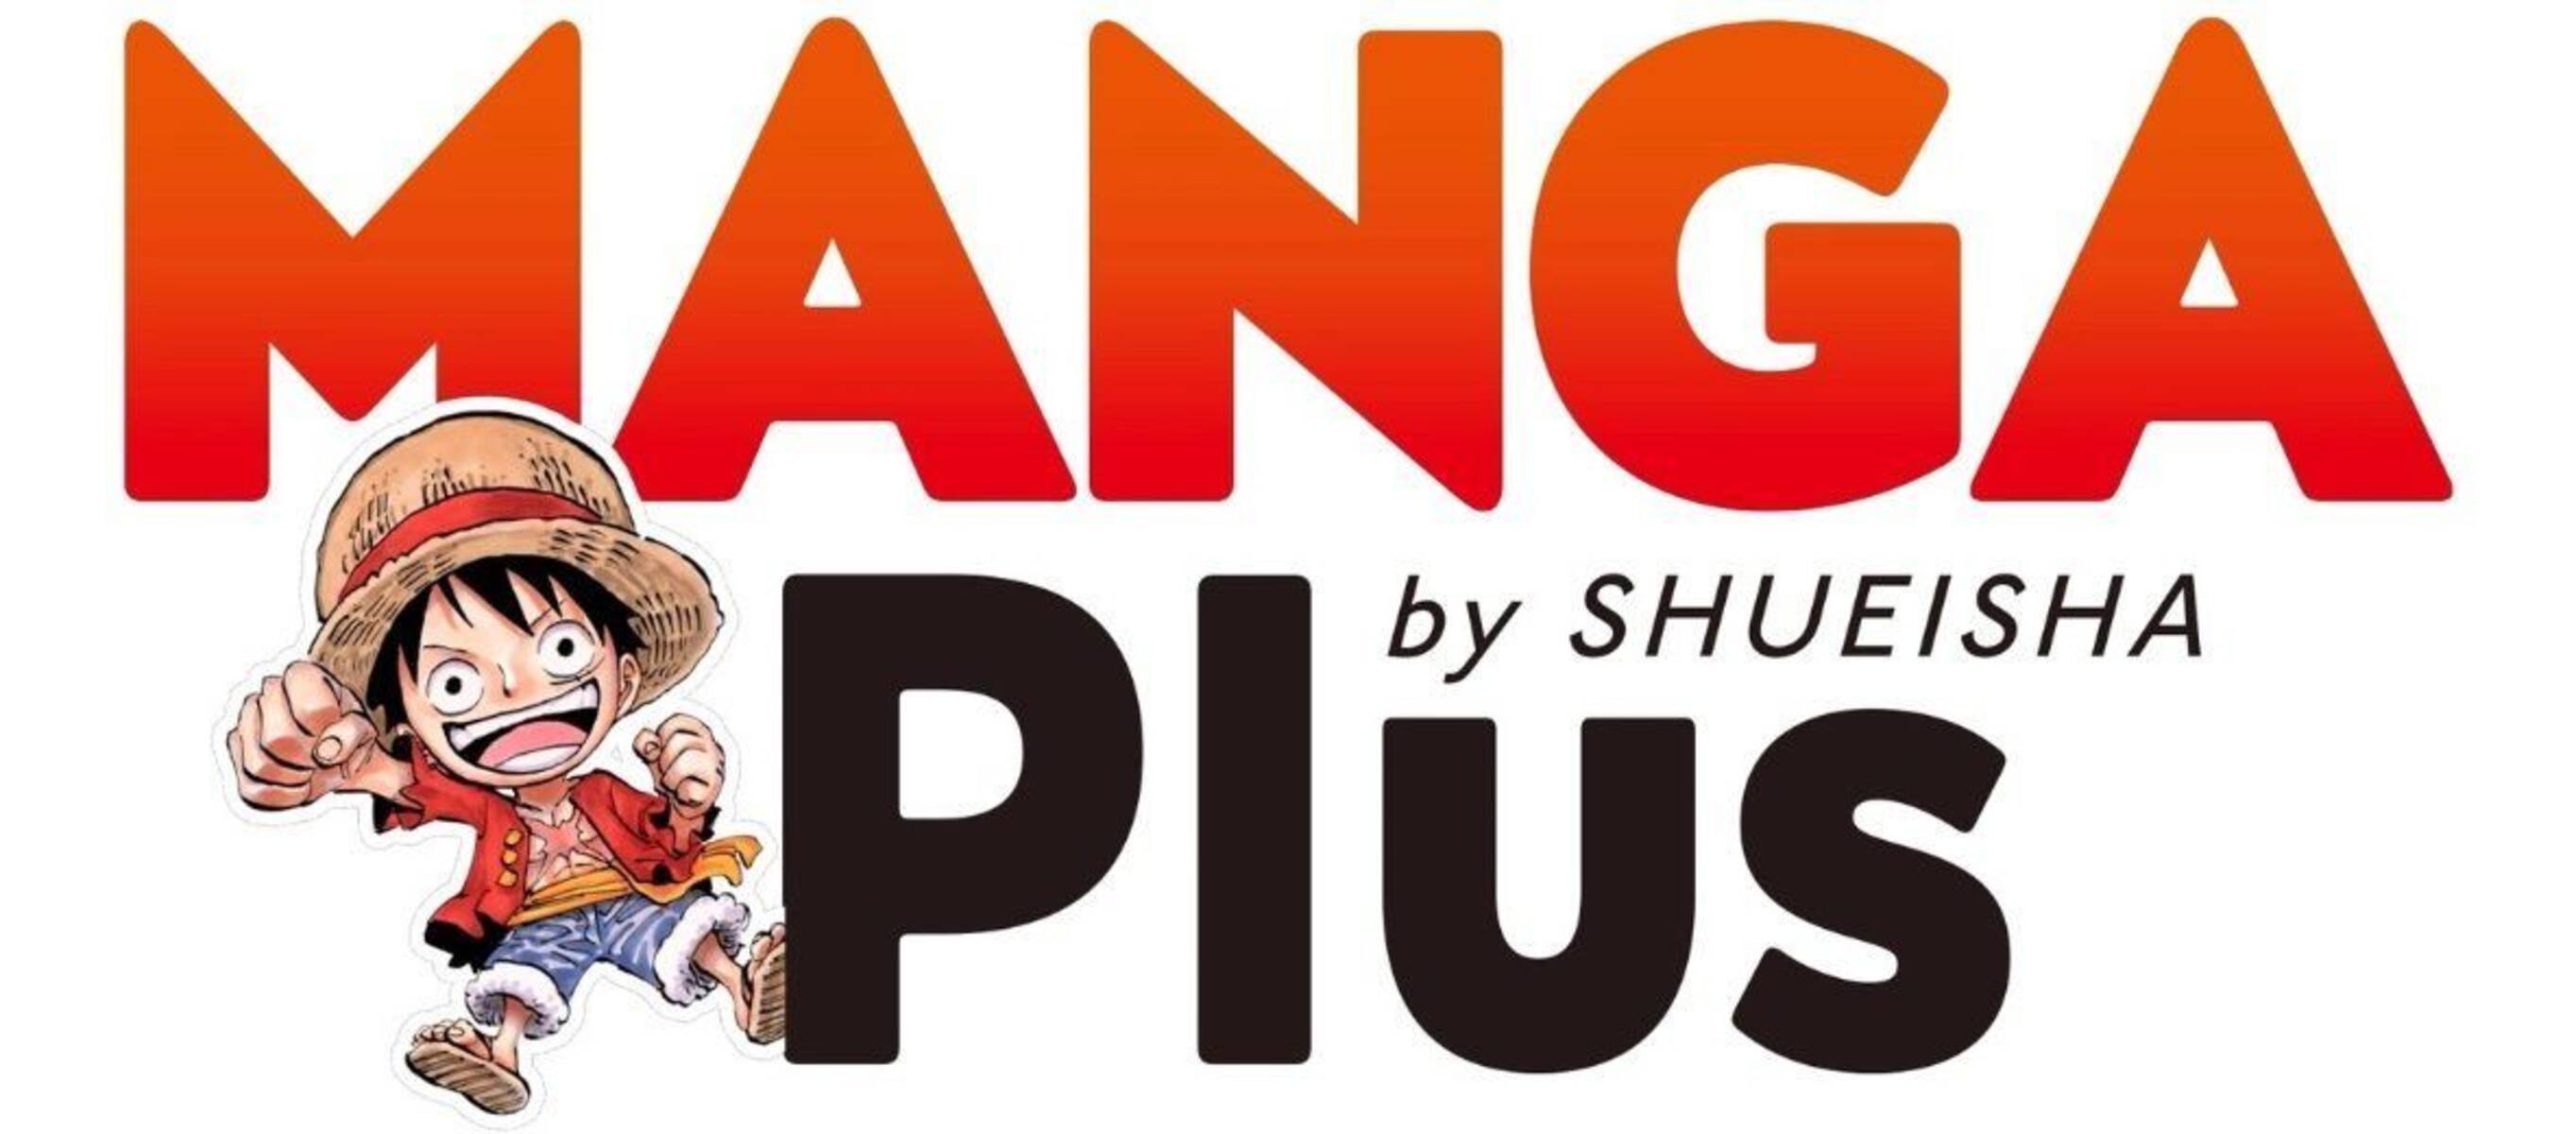 Dragon Ball Super gratis y en español en la app Manga Plus